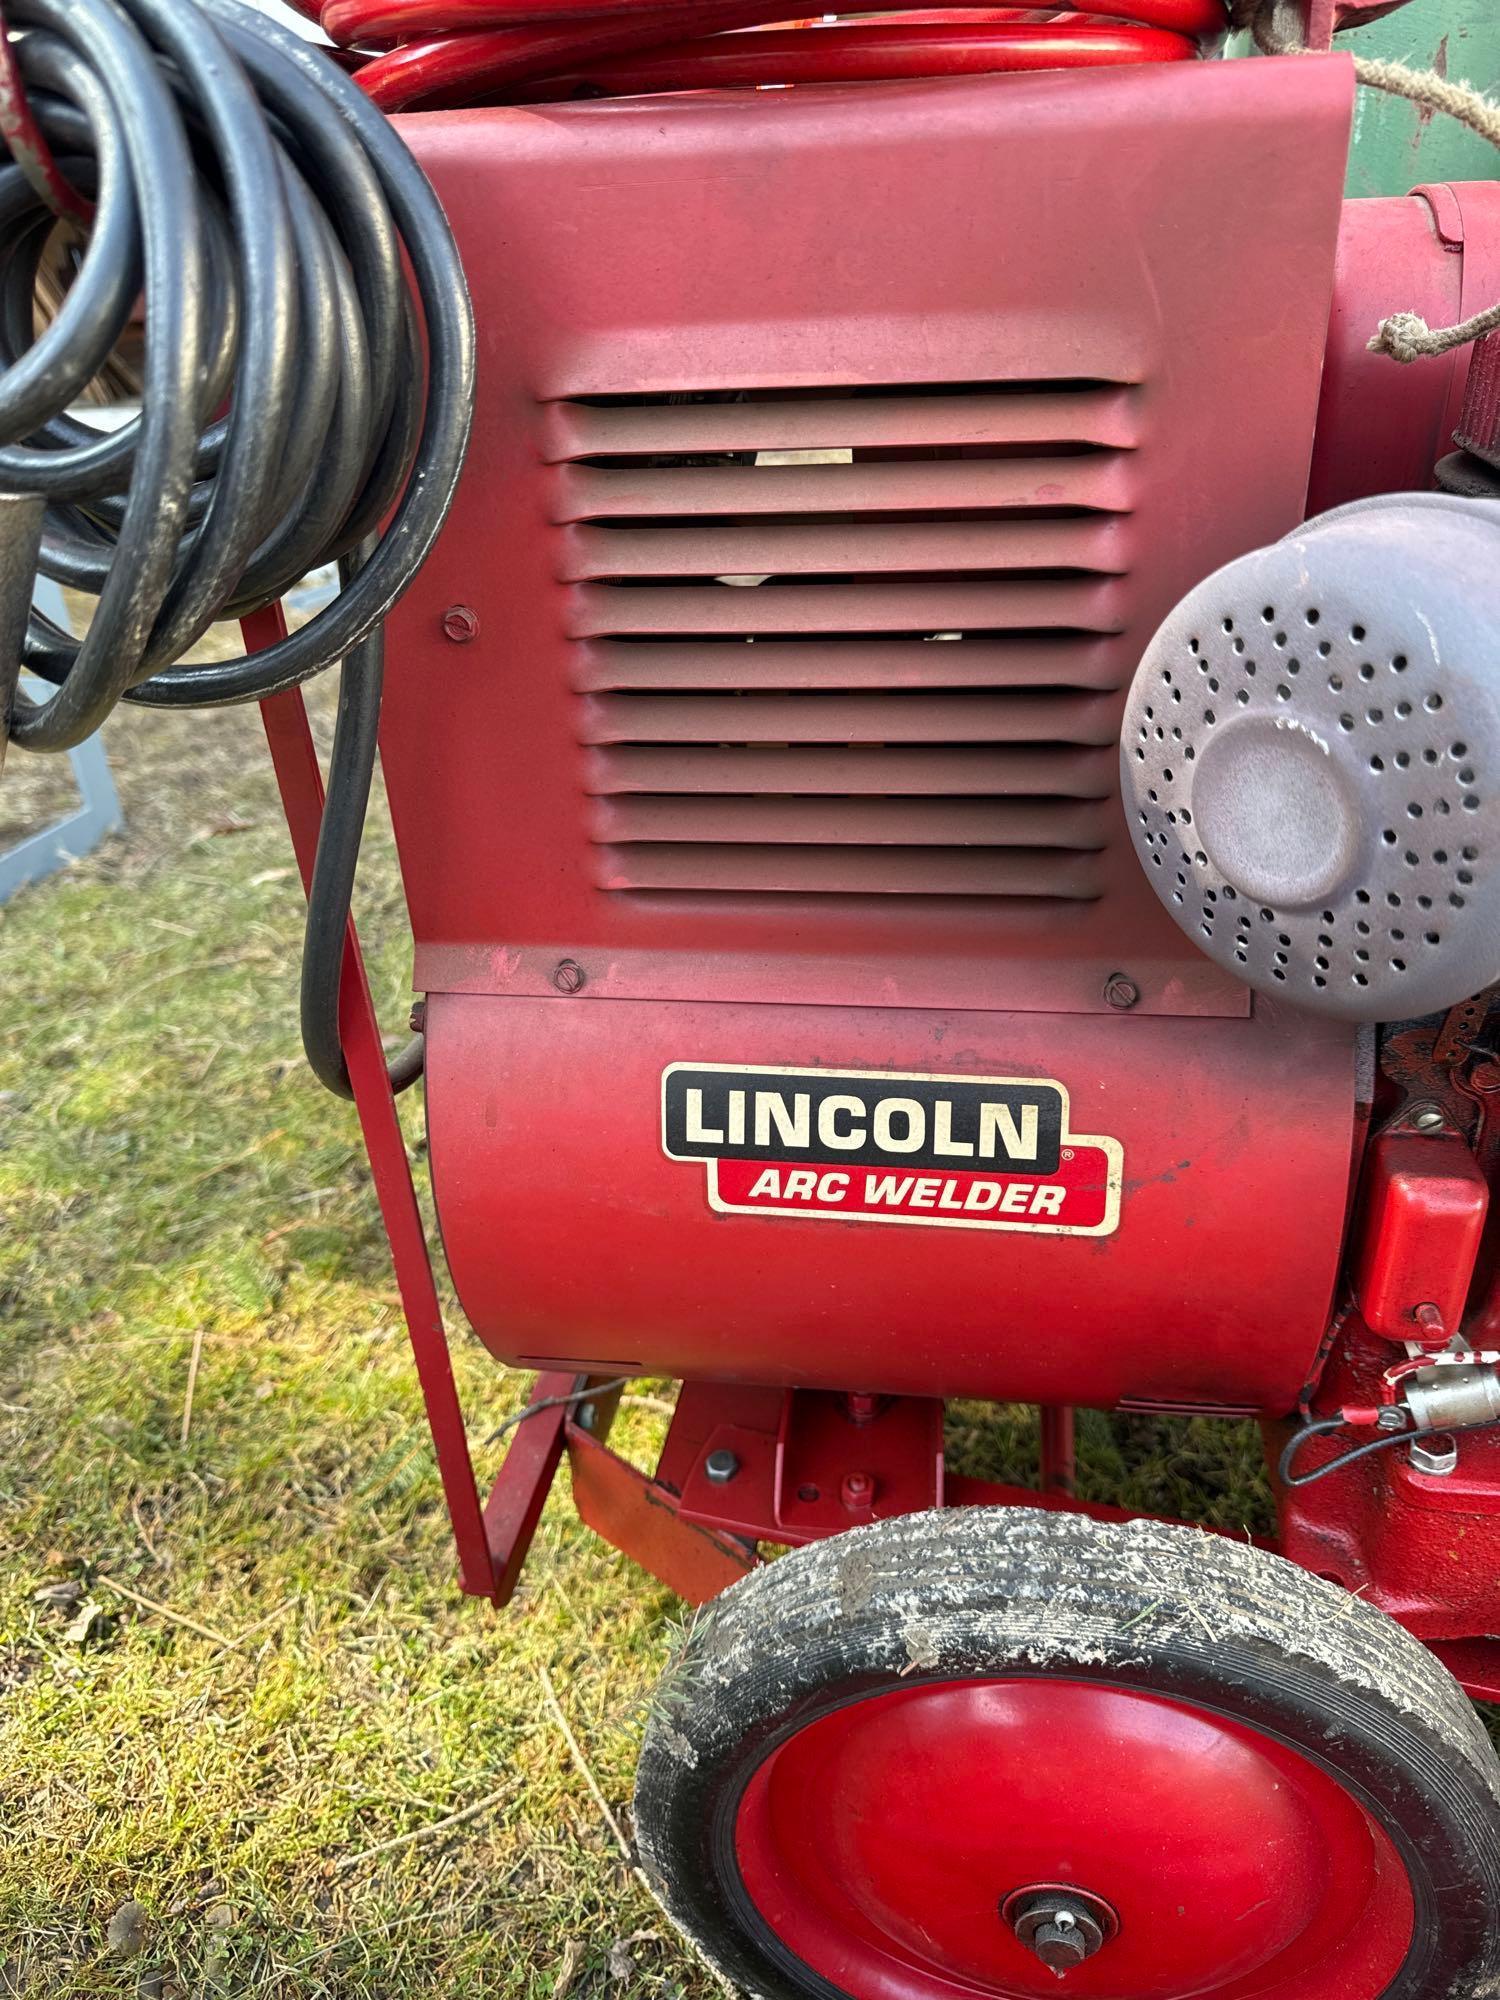 Lincoln arc welder with Kohler engine